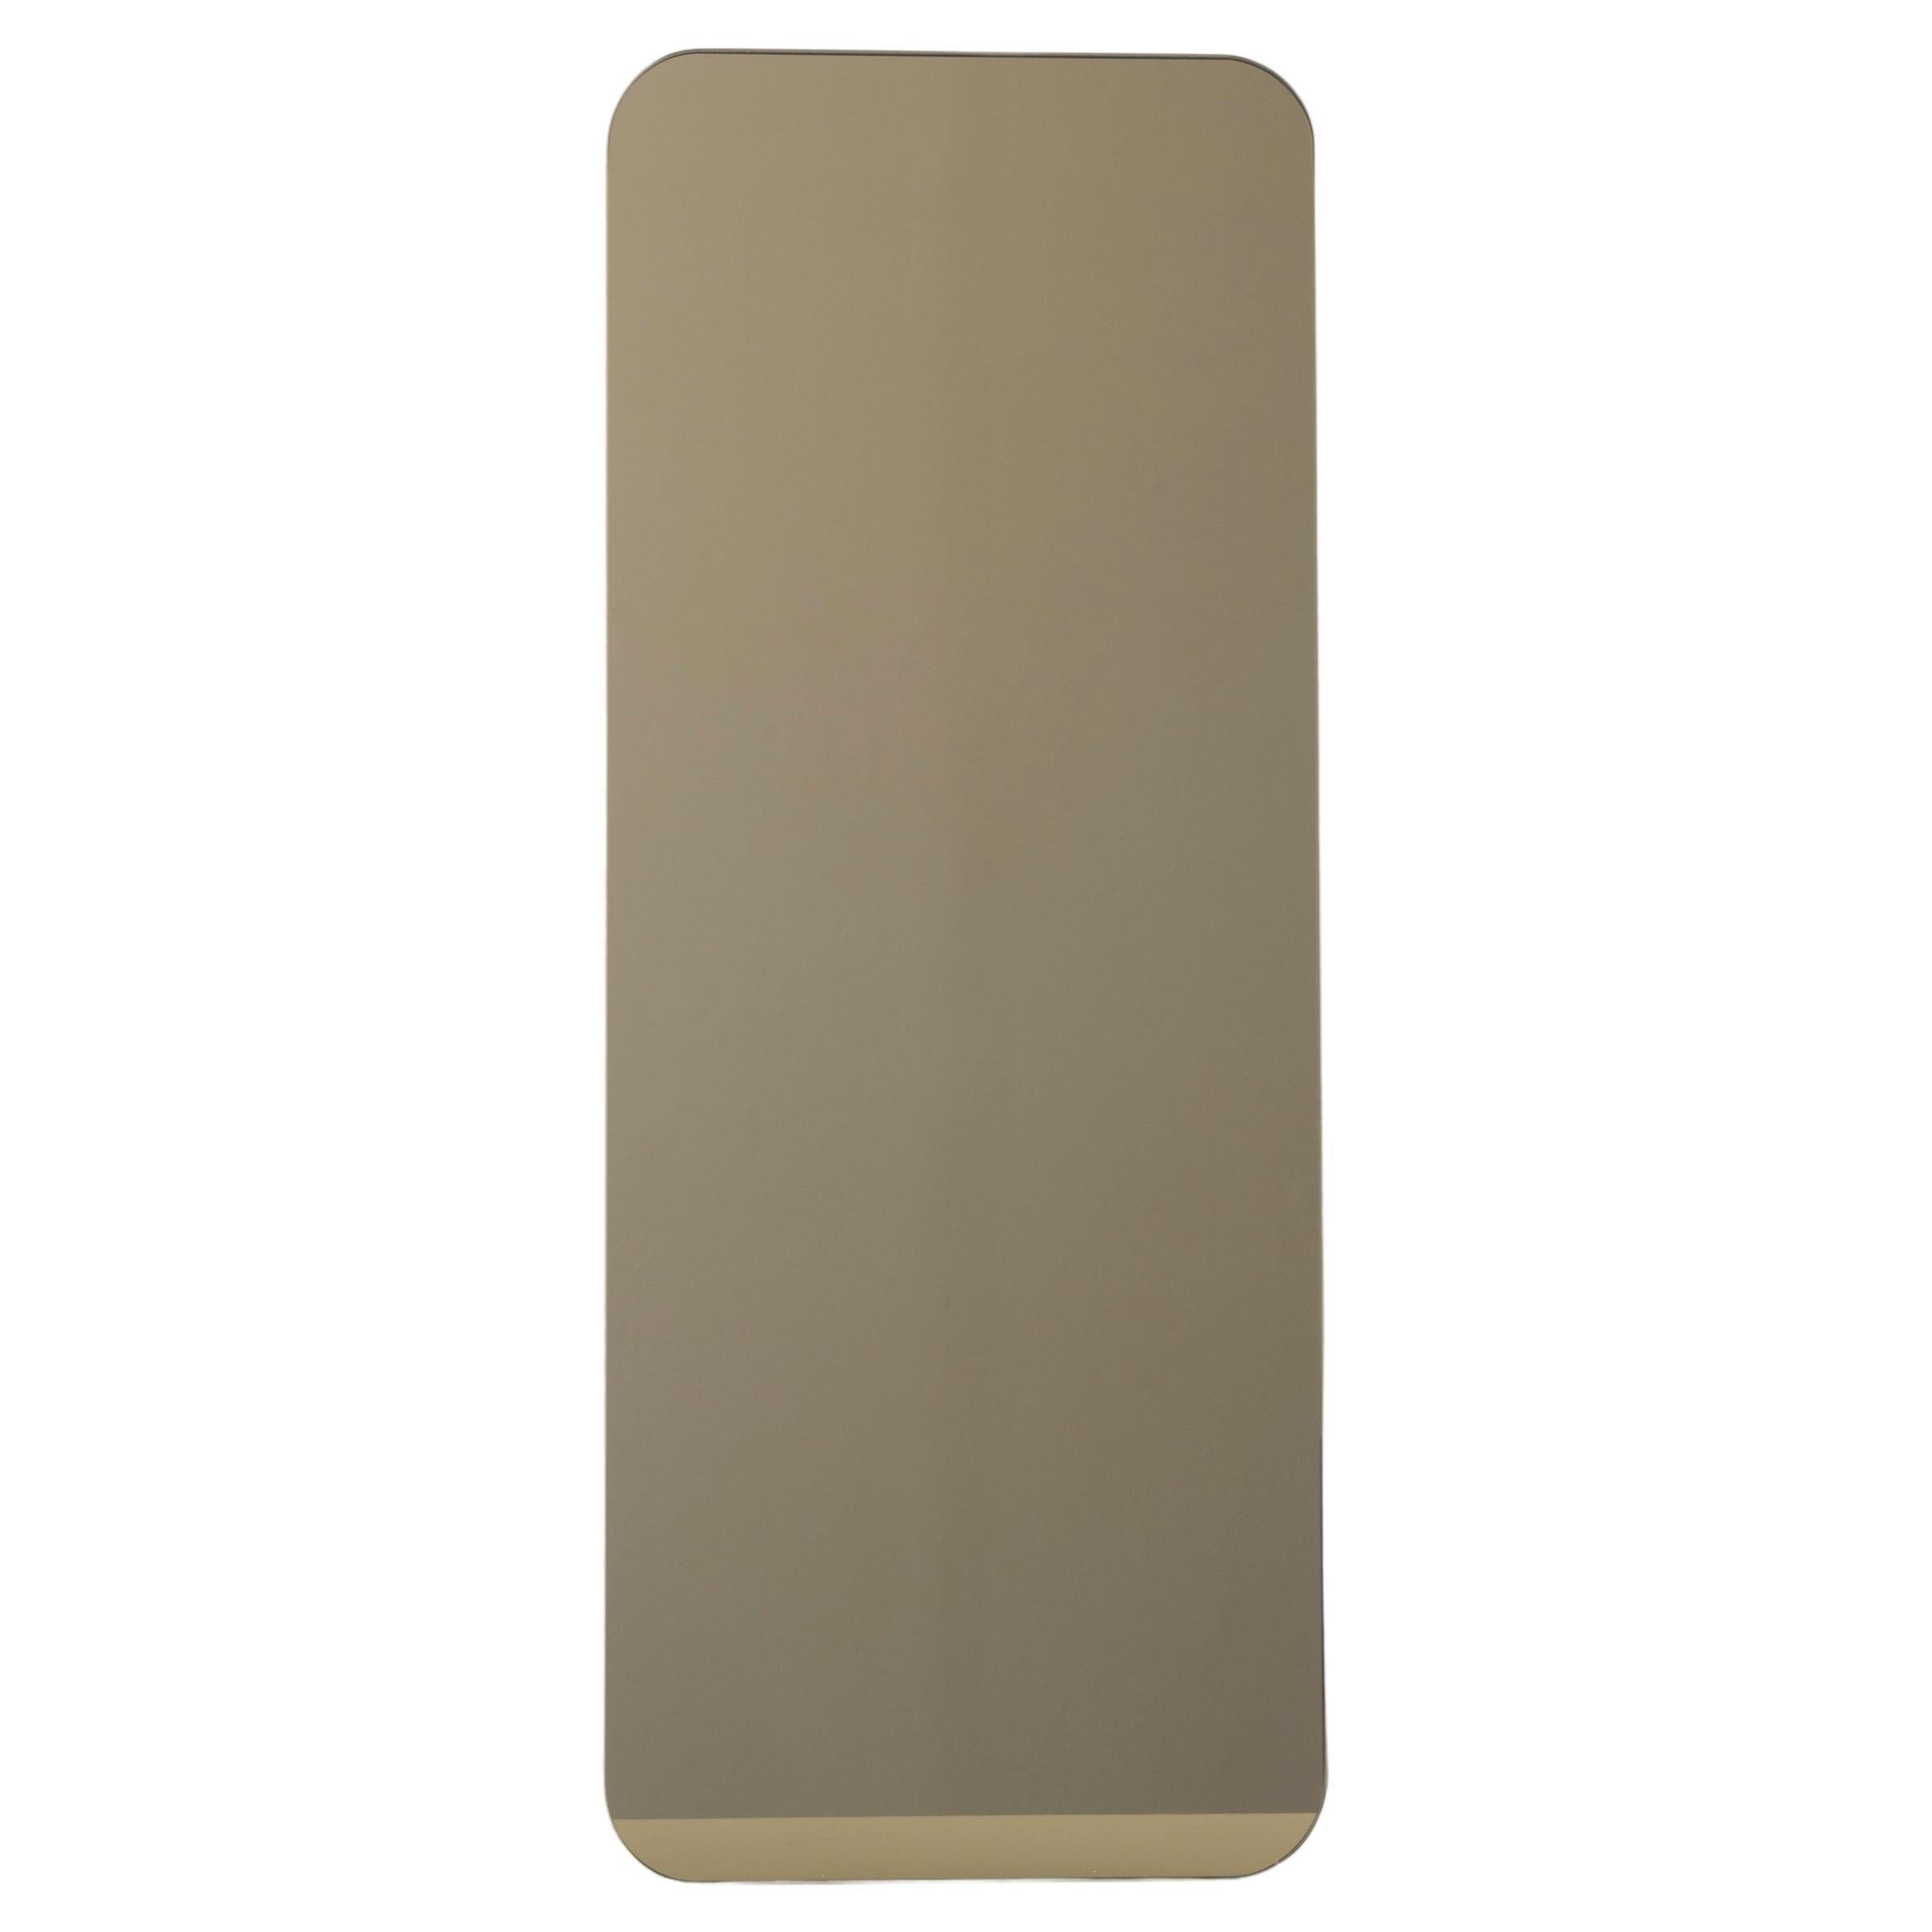 Quadris Bronze Rectangular Frameless Modern Mirror, Medium For Sale